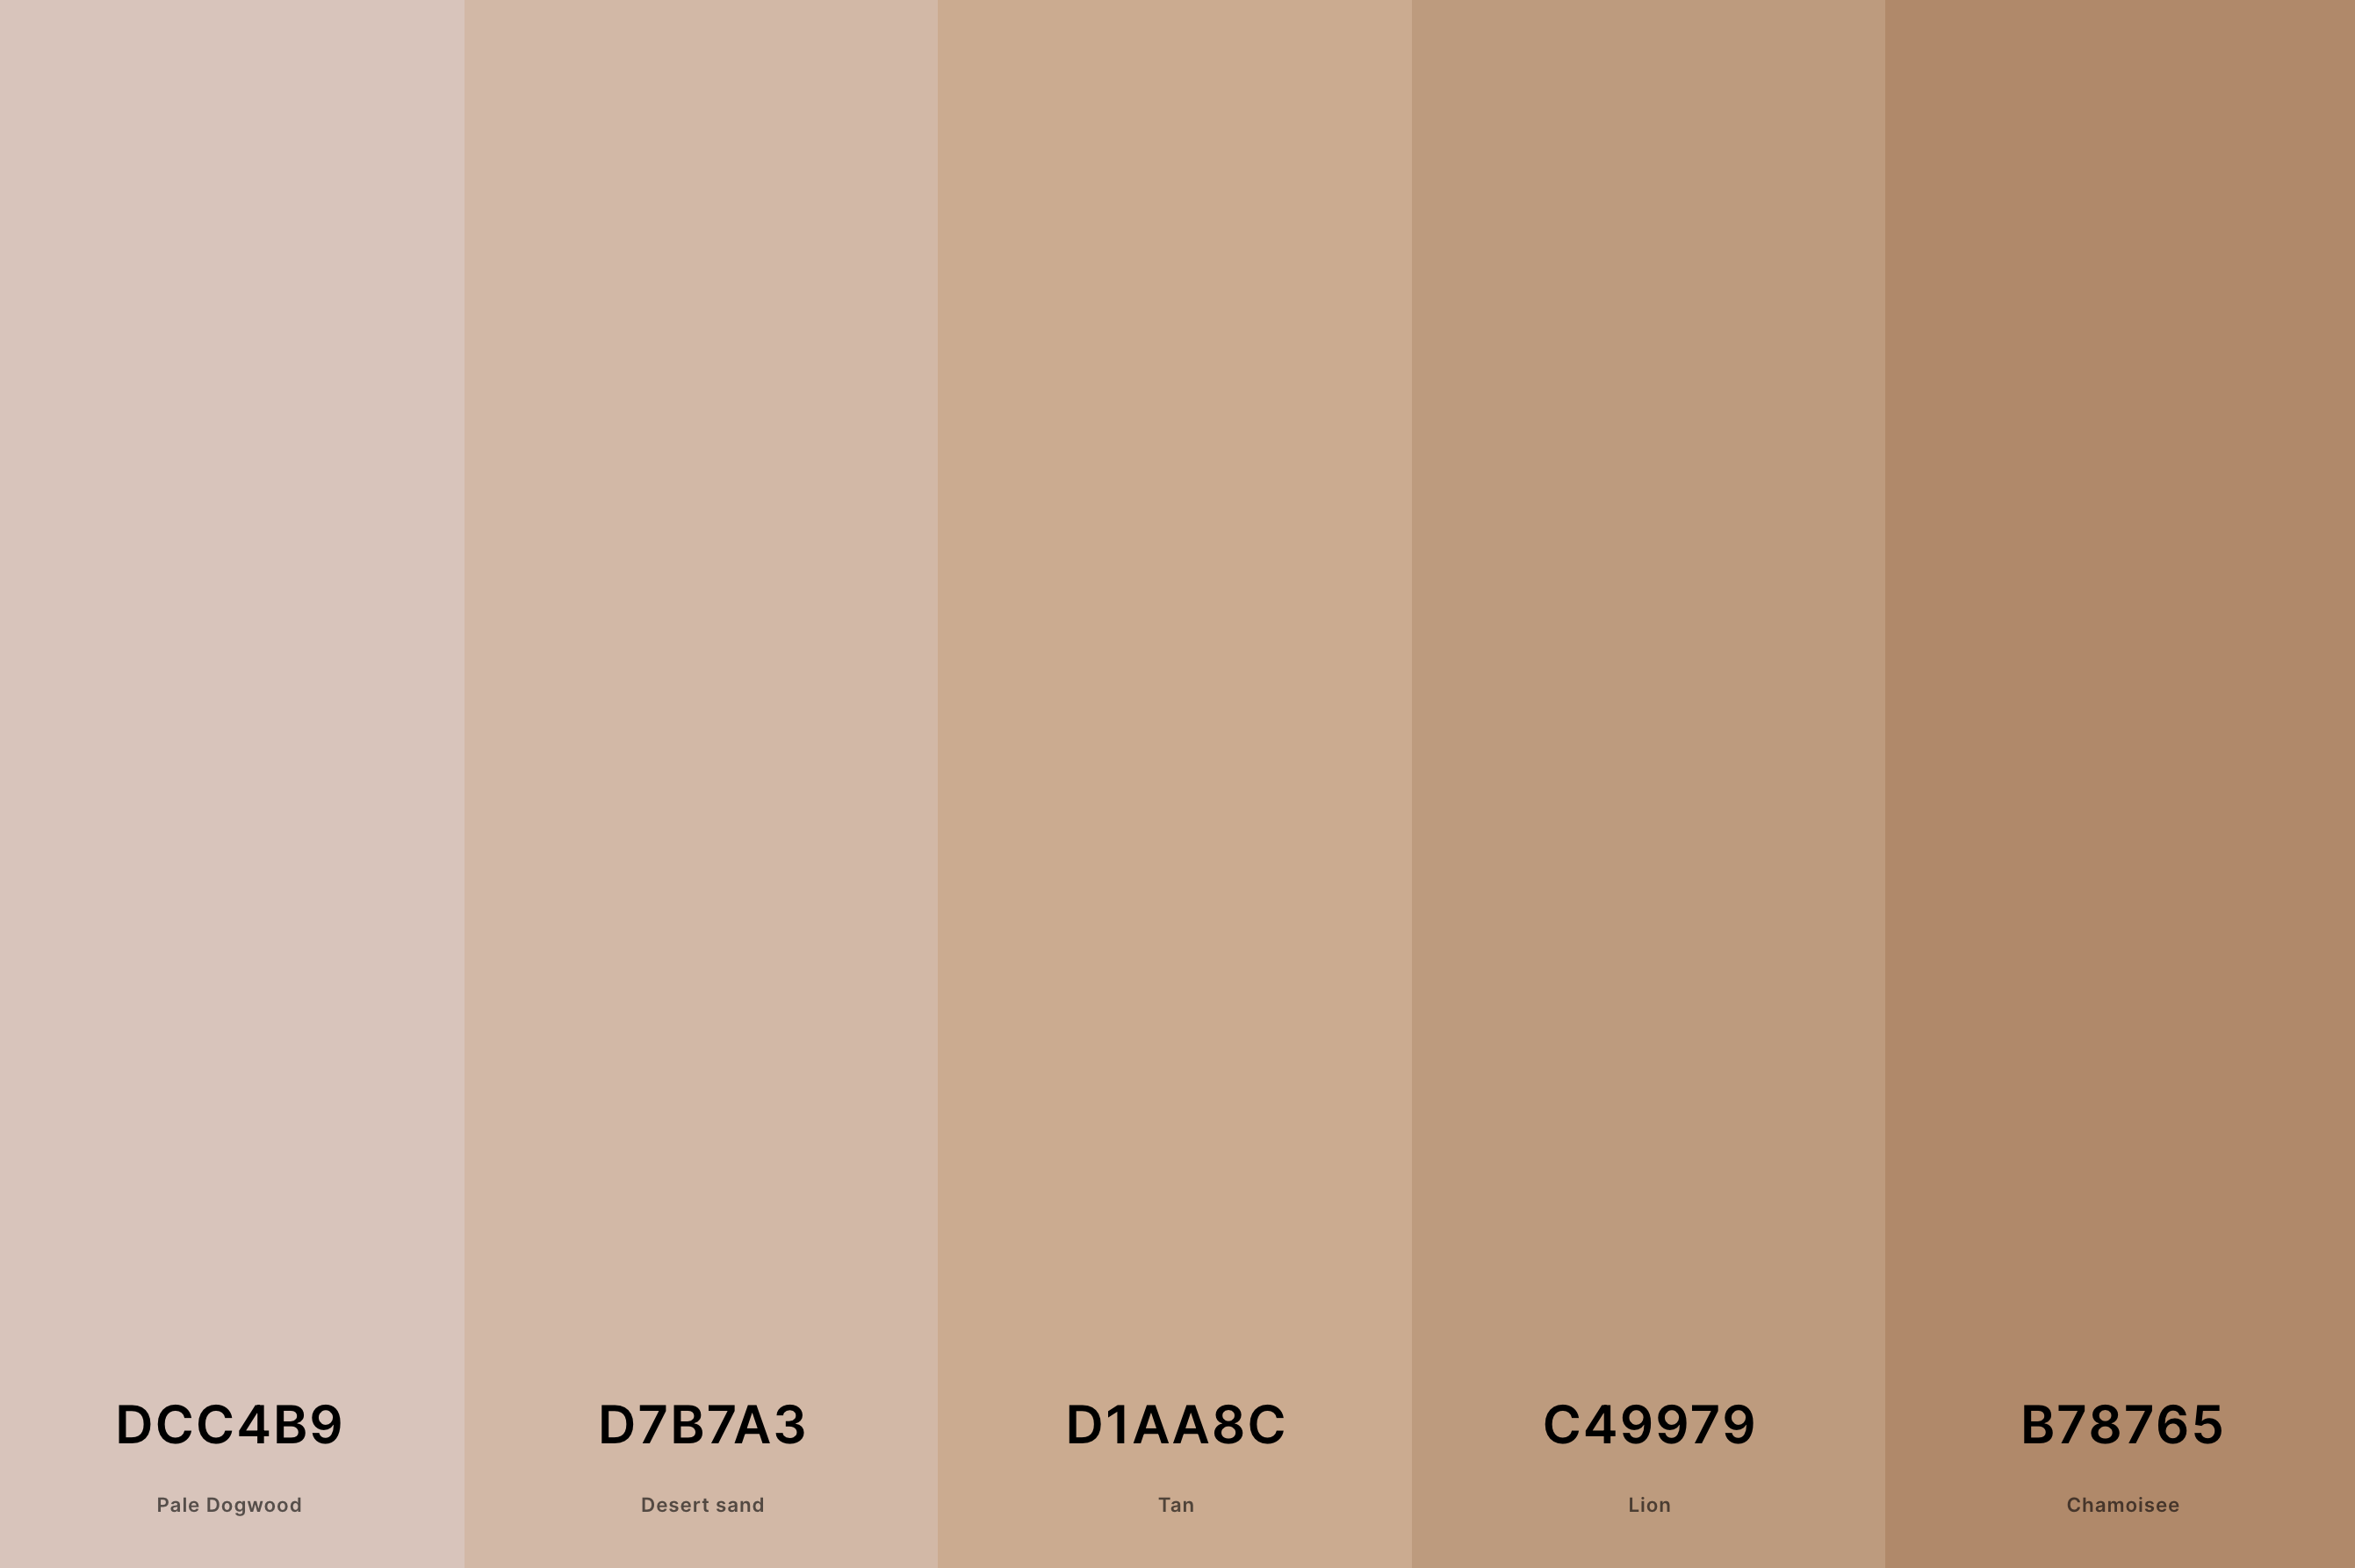 1. Tan Skin Color Palette Color Palette with Pale Dogwood (Hex #DCC4B9) + Desert Sand (Hex #D7B7A3) + Tan (Hex #D1AA8C) + Lion (Hex #C49979) + Chamoisee (Hex #B78765) Color Palette with Hex Codes